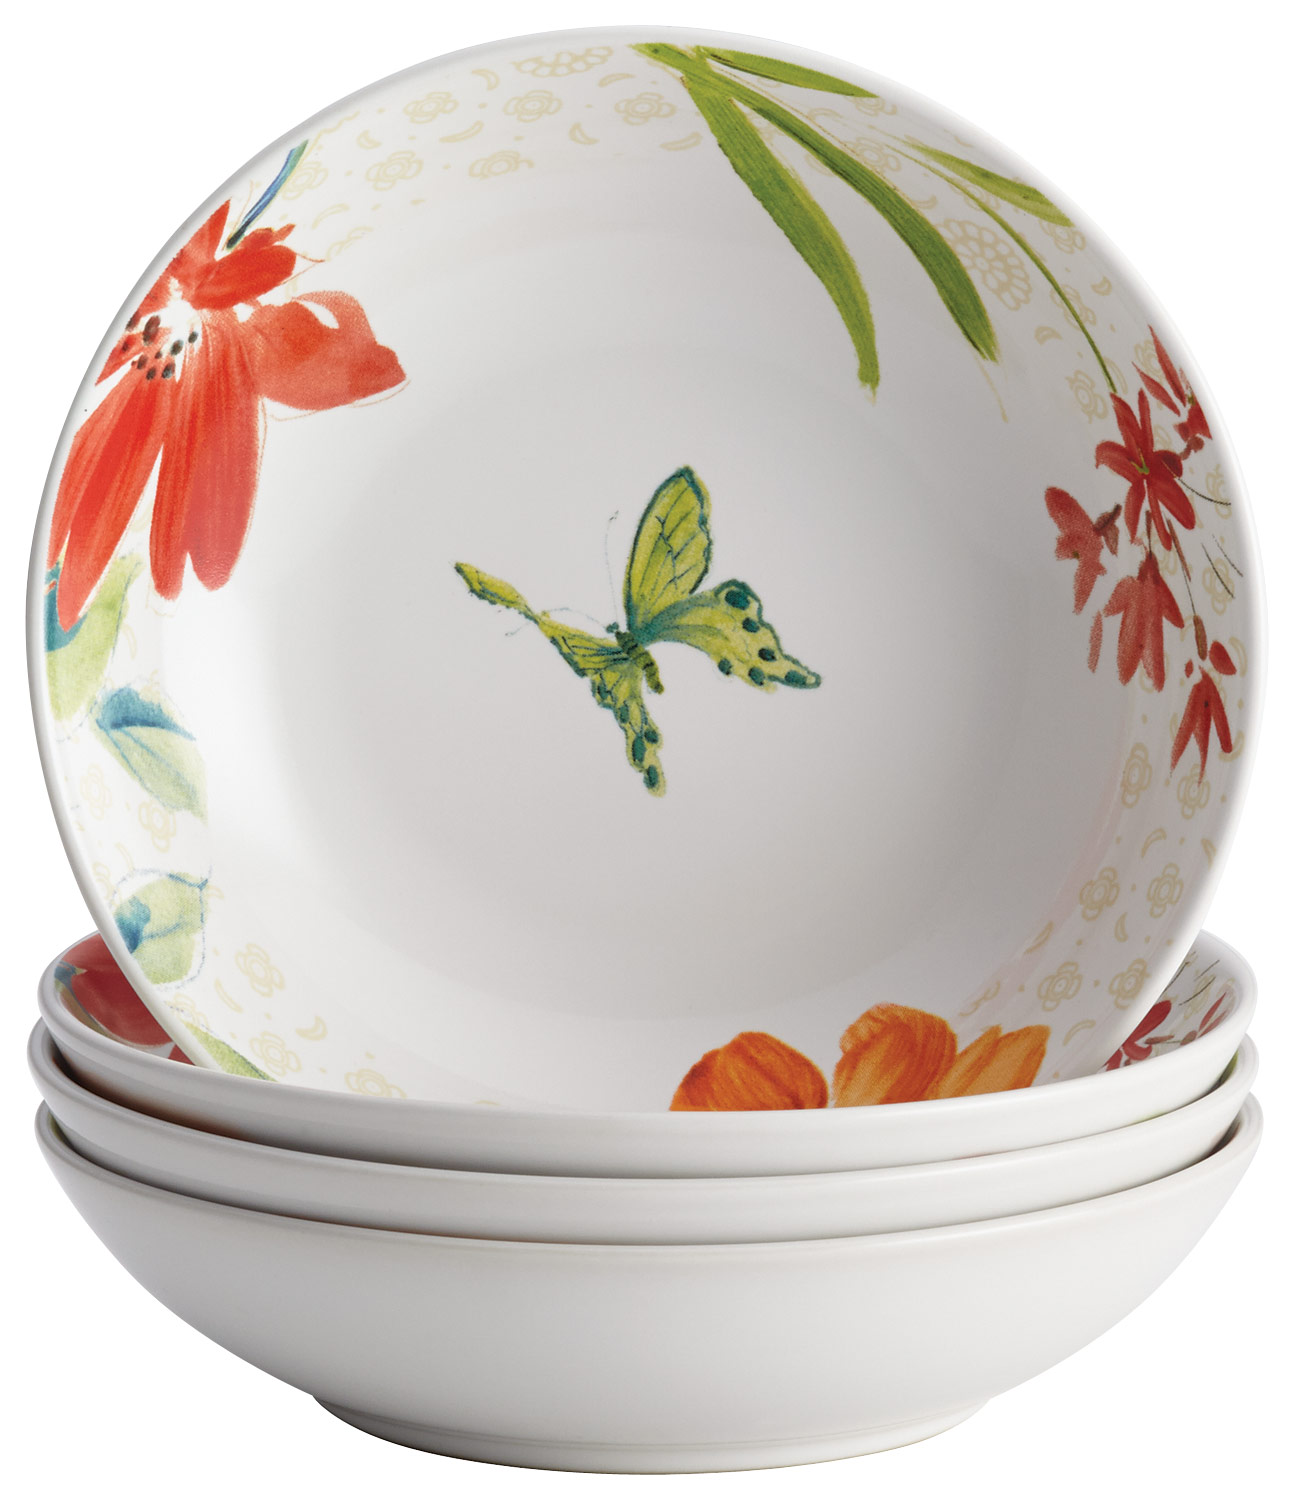  Bonjour - Al Fresco 4-Piece Fruit Bowl Set - White